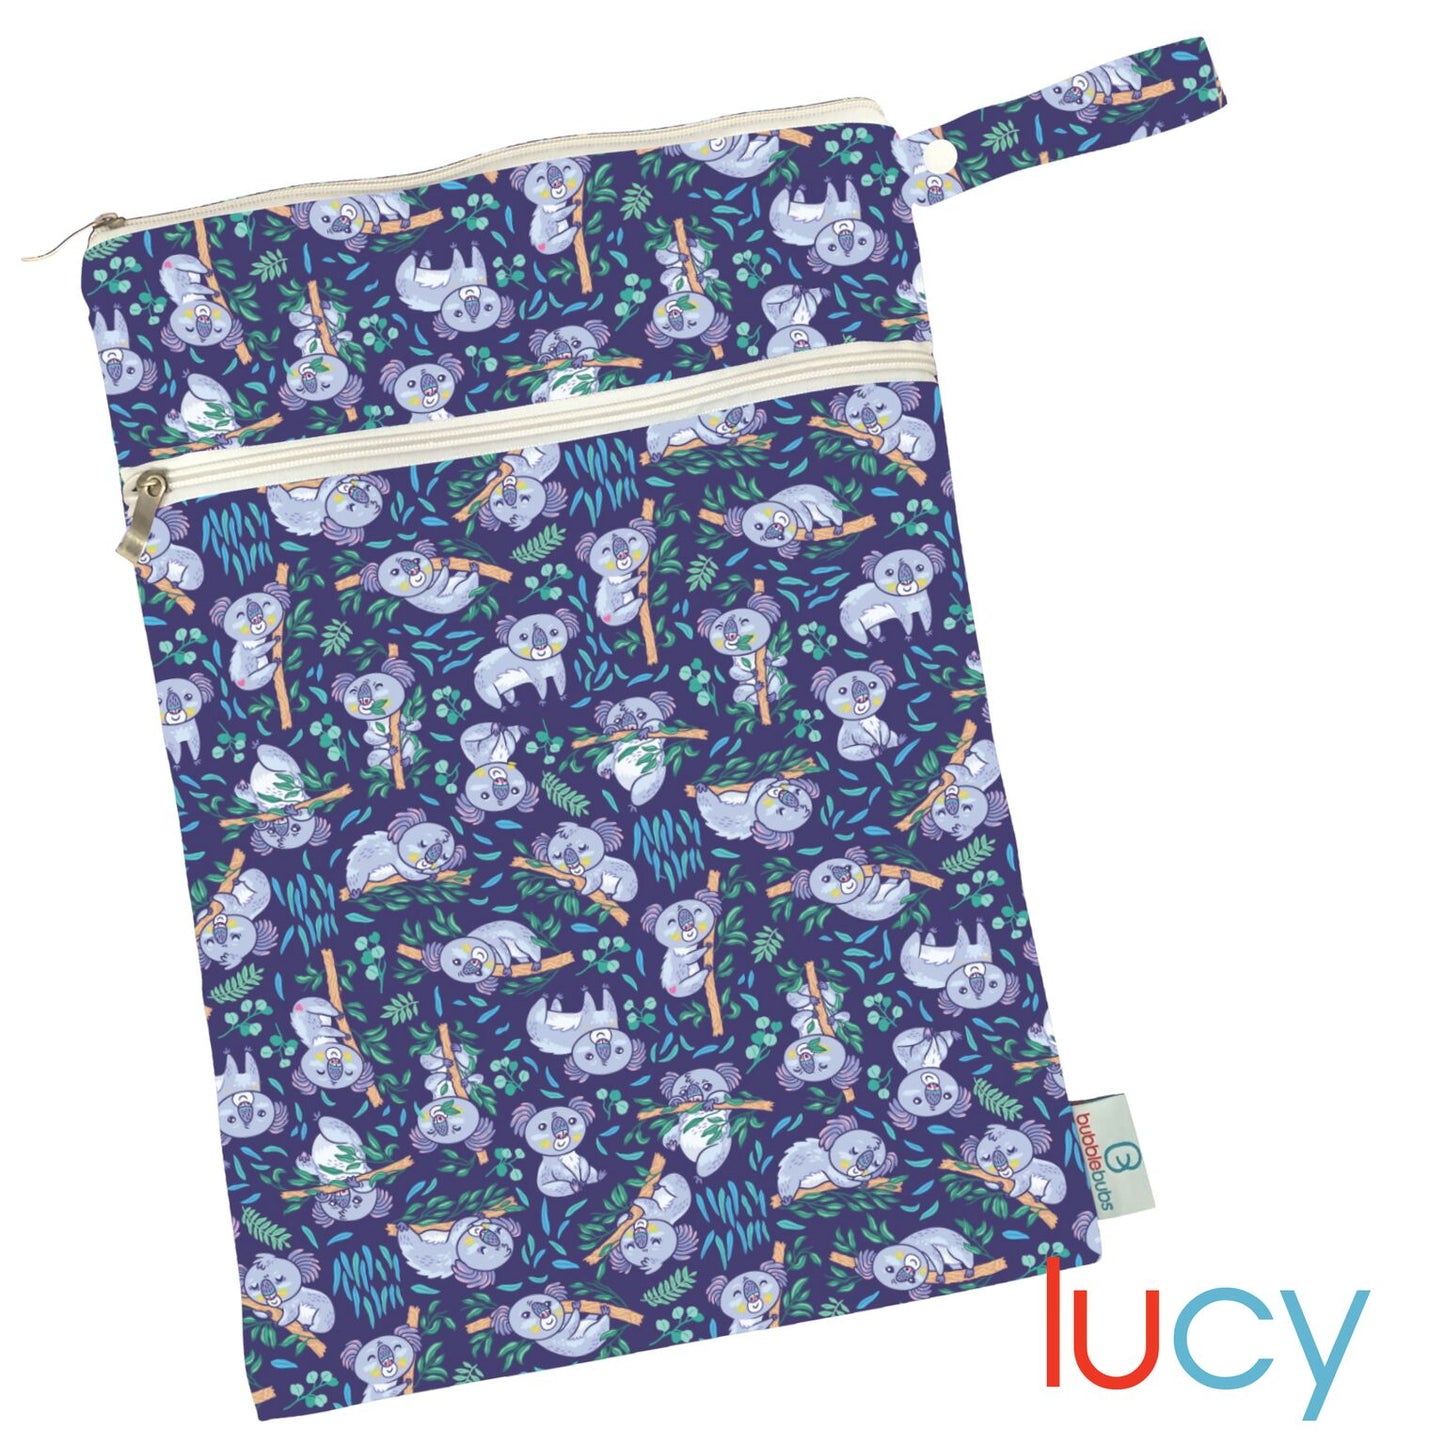 Double Pocket Wet Bag | Lucy (Minky)